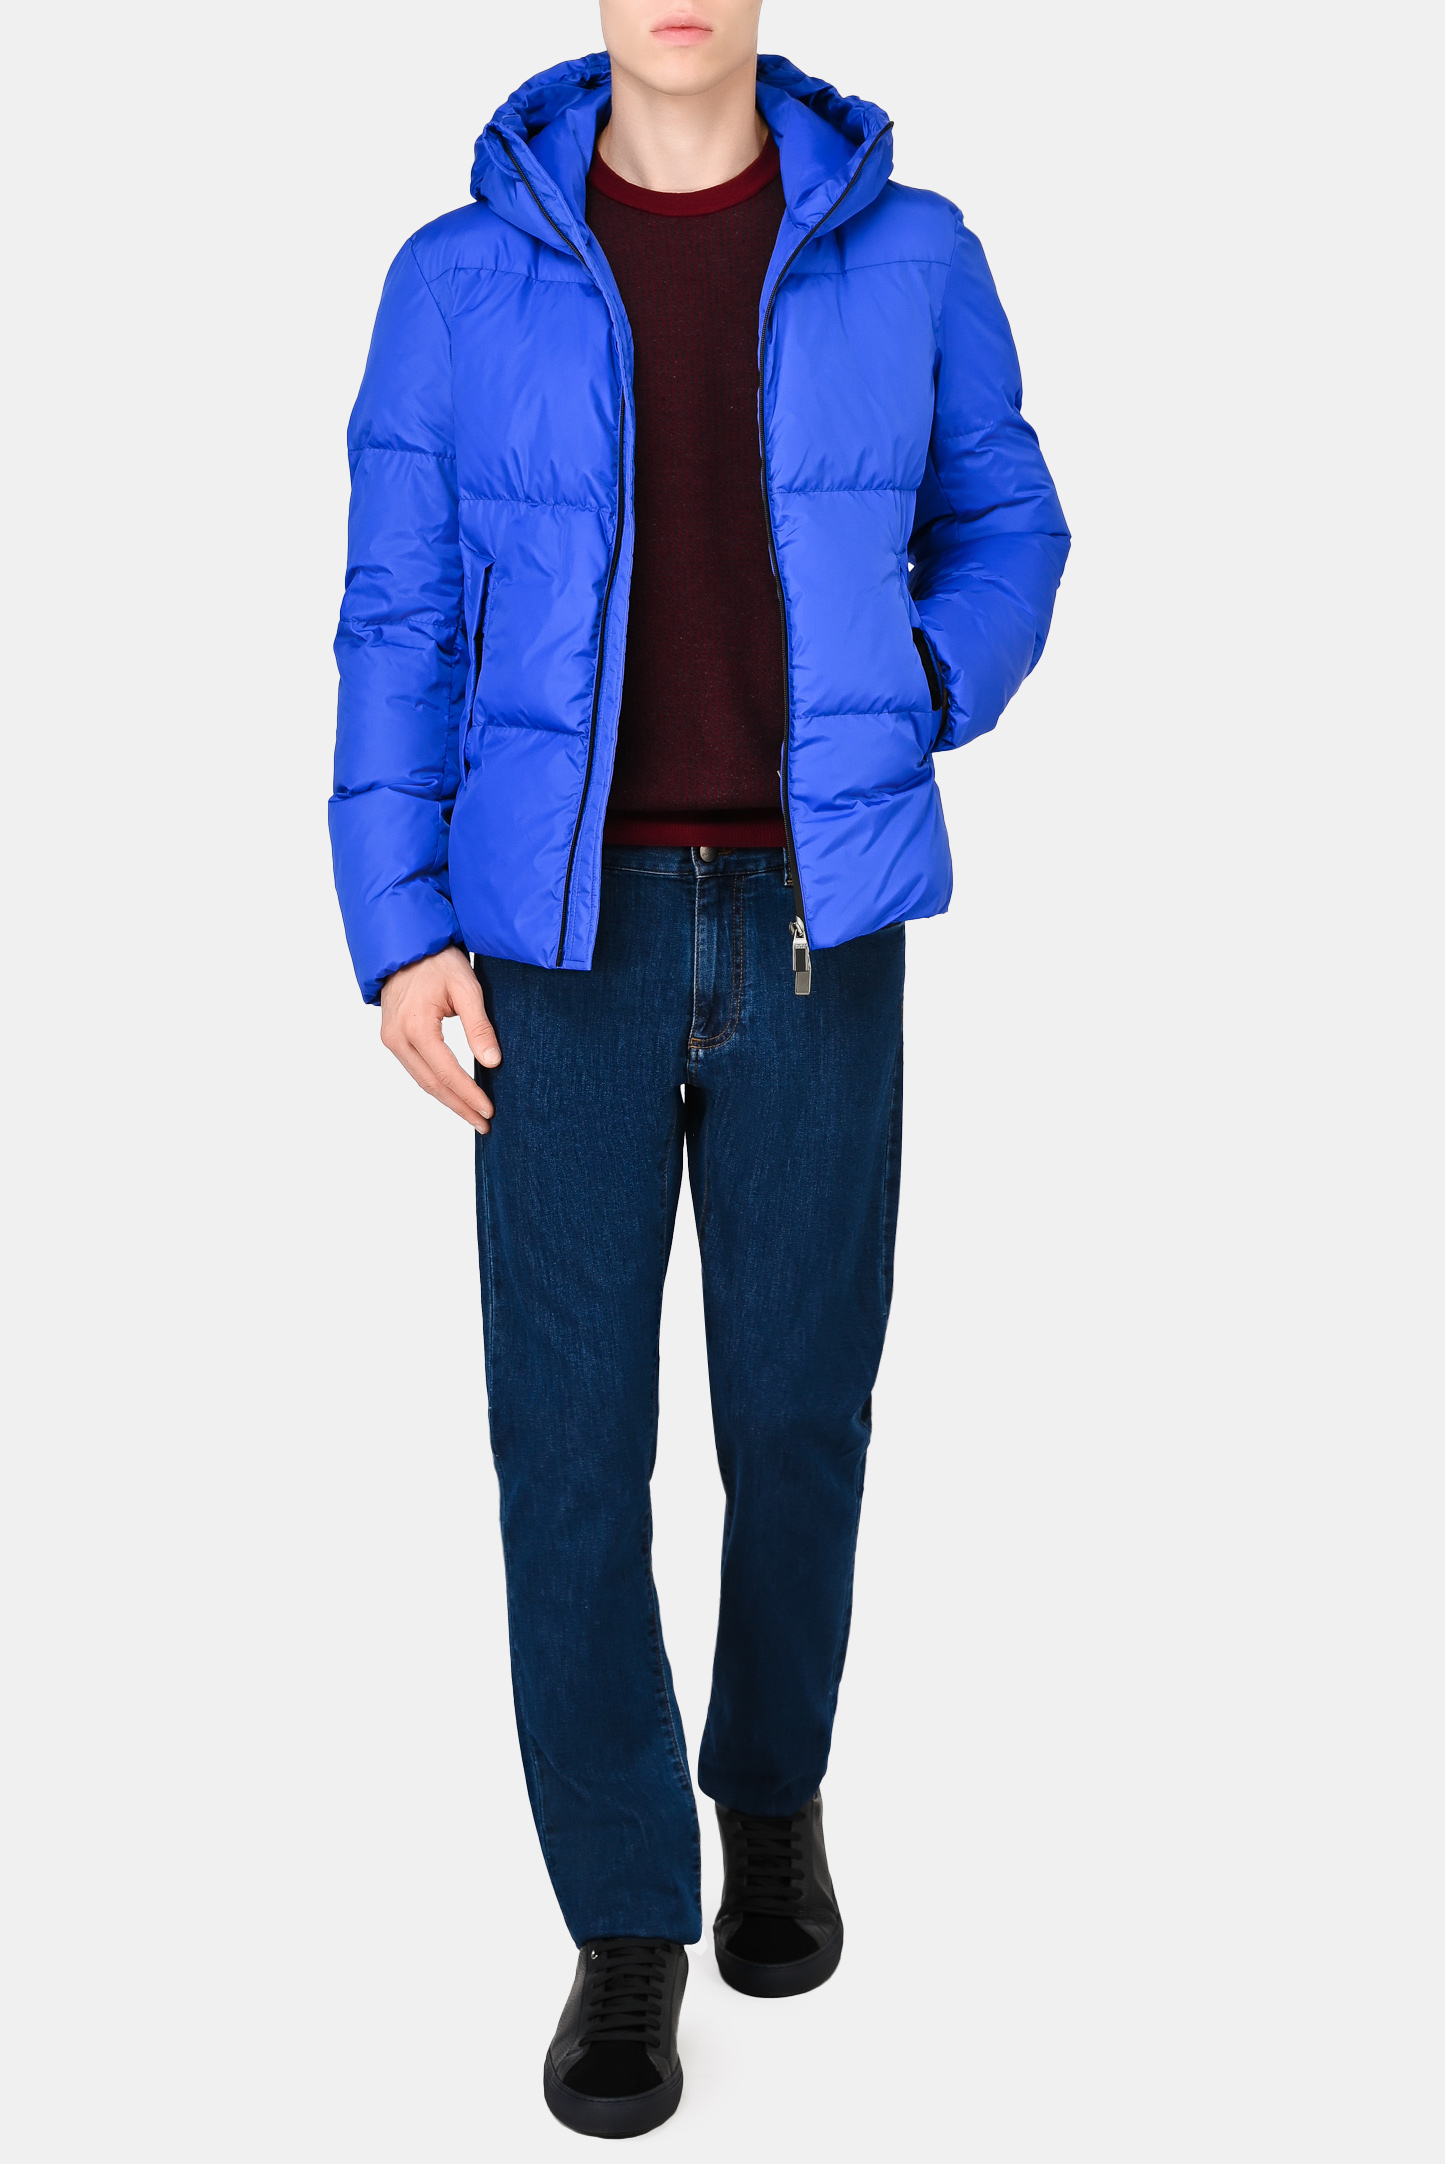 Куртка CANALI SY02125 O40670, цвет: Синий, Мужской